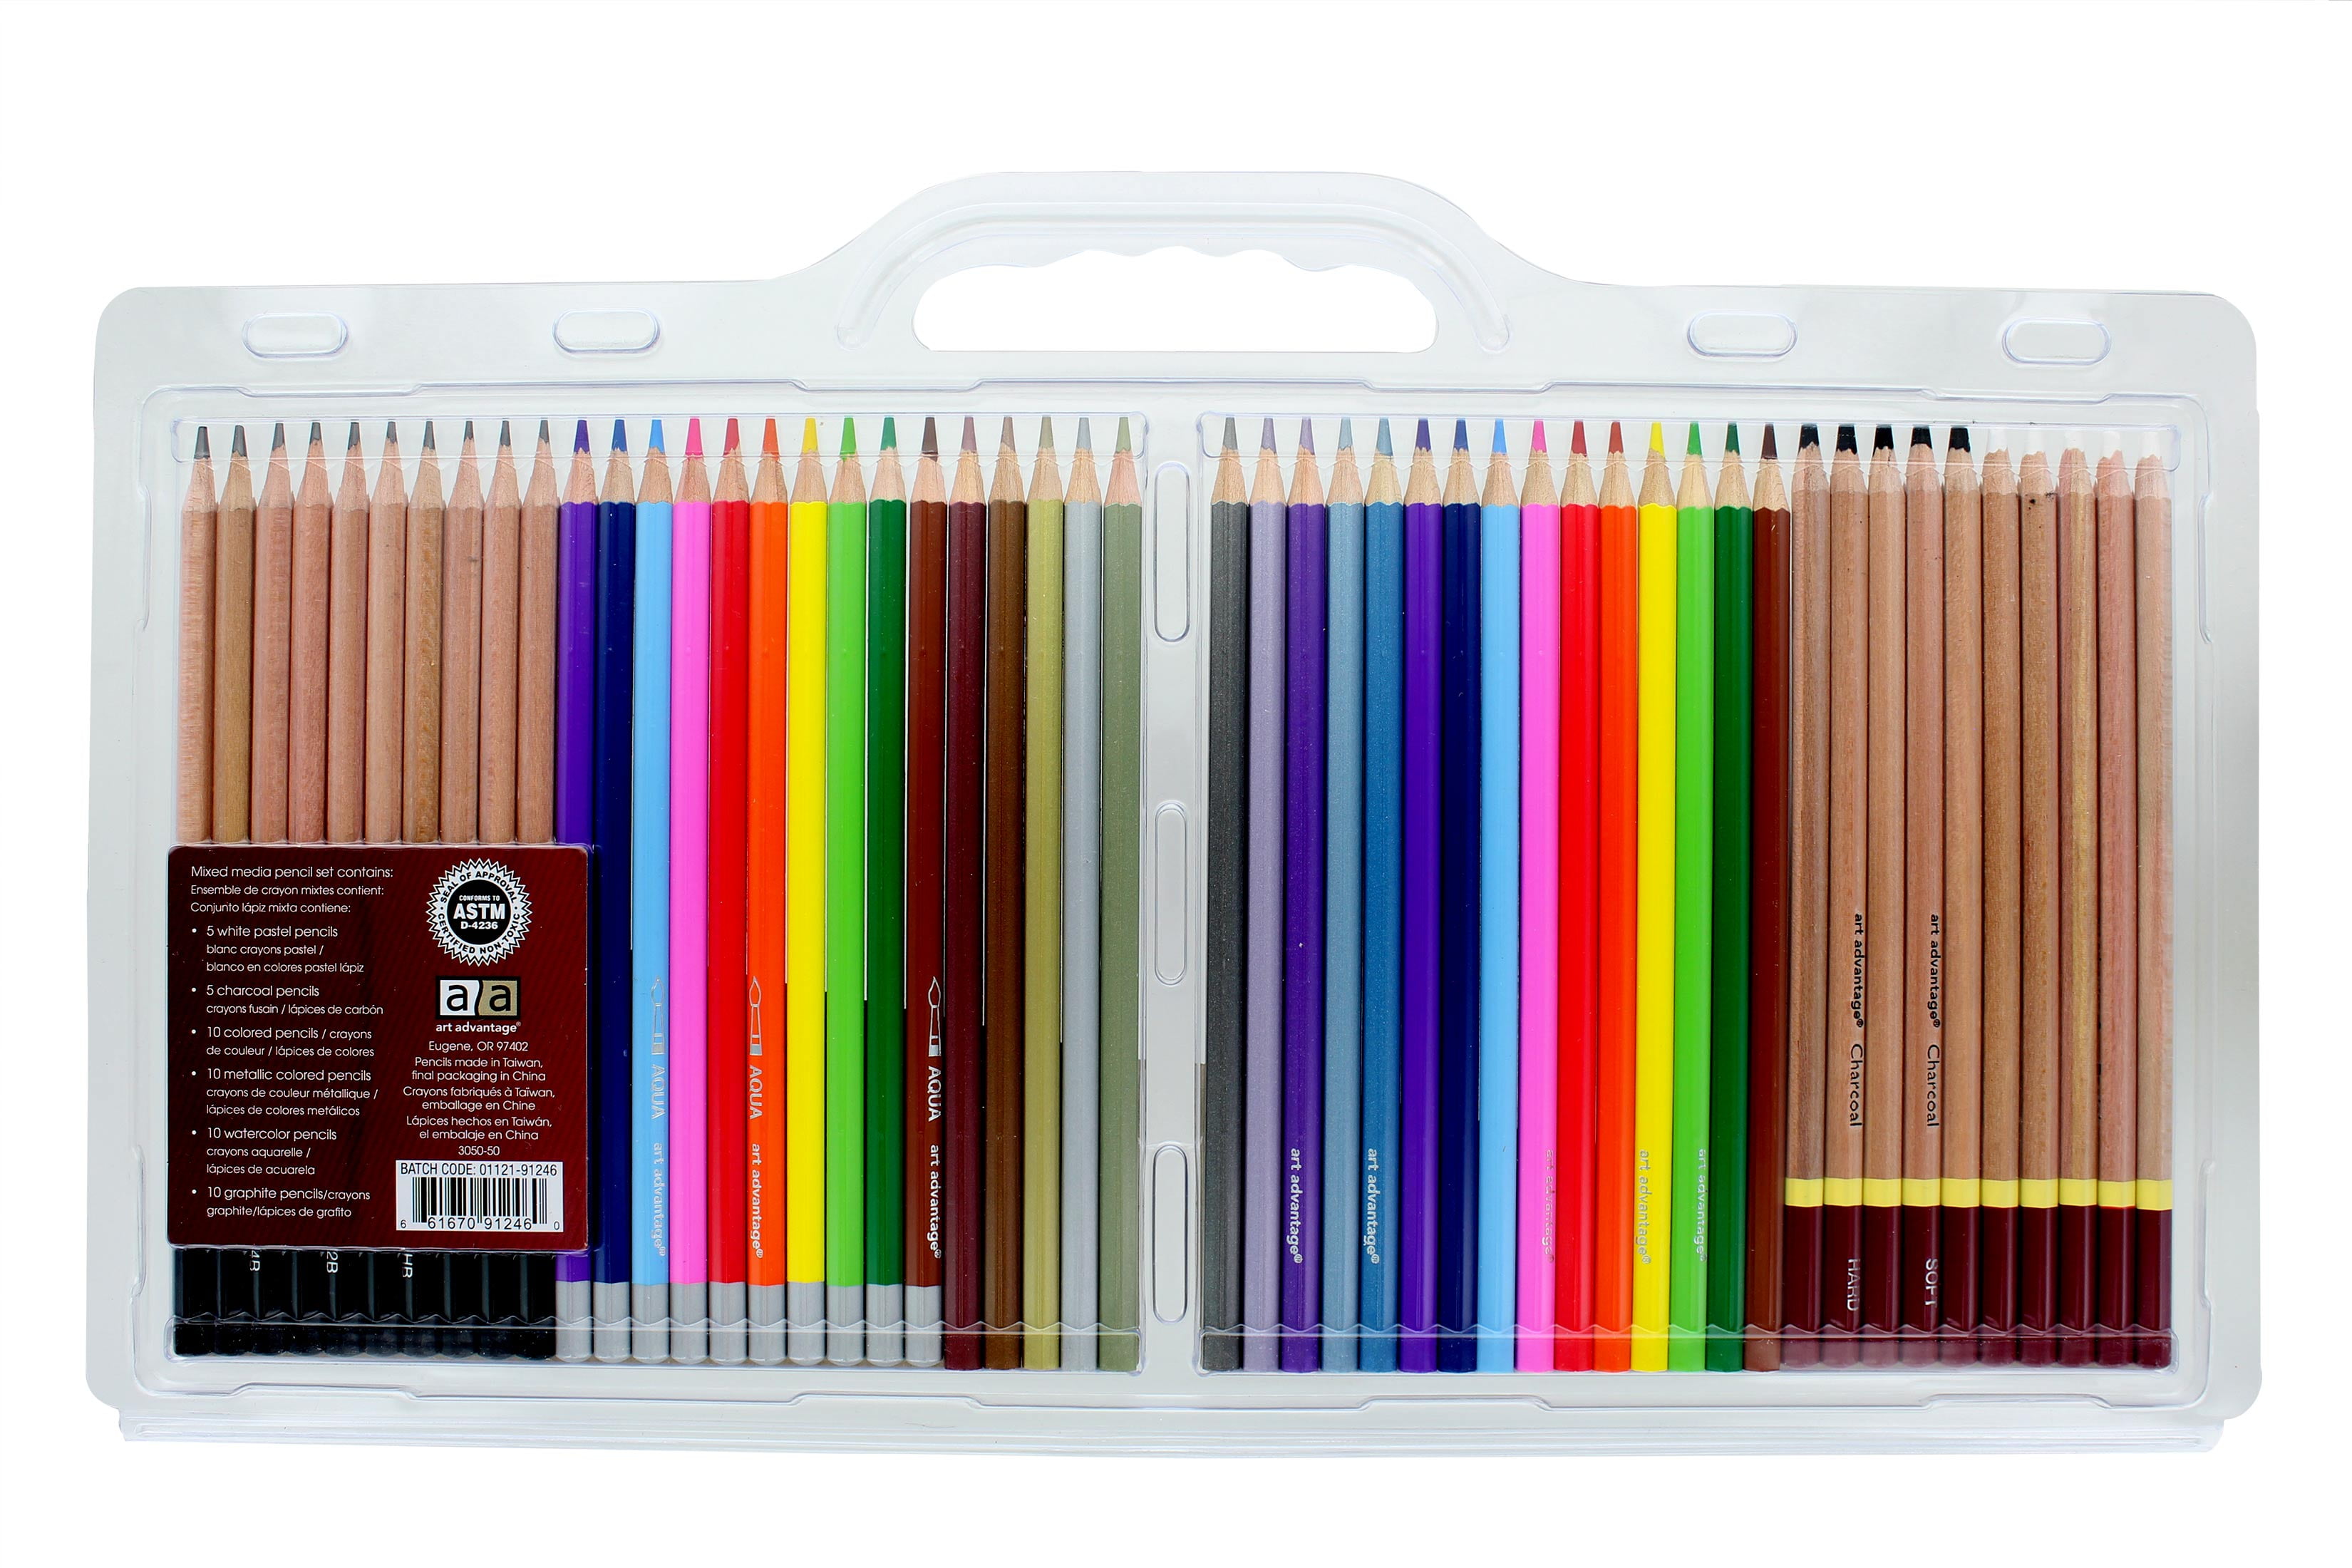 Classic Colour Pencil & Connector Pen Marker Mixed Media Gift Set